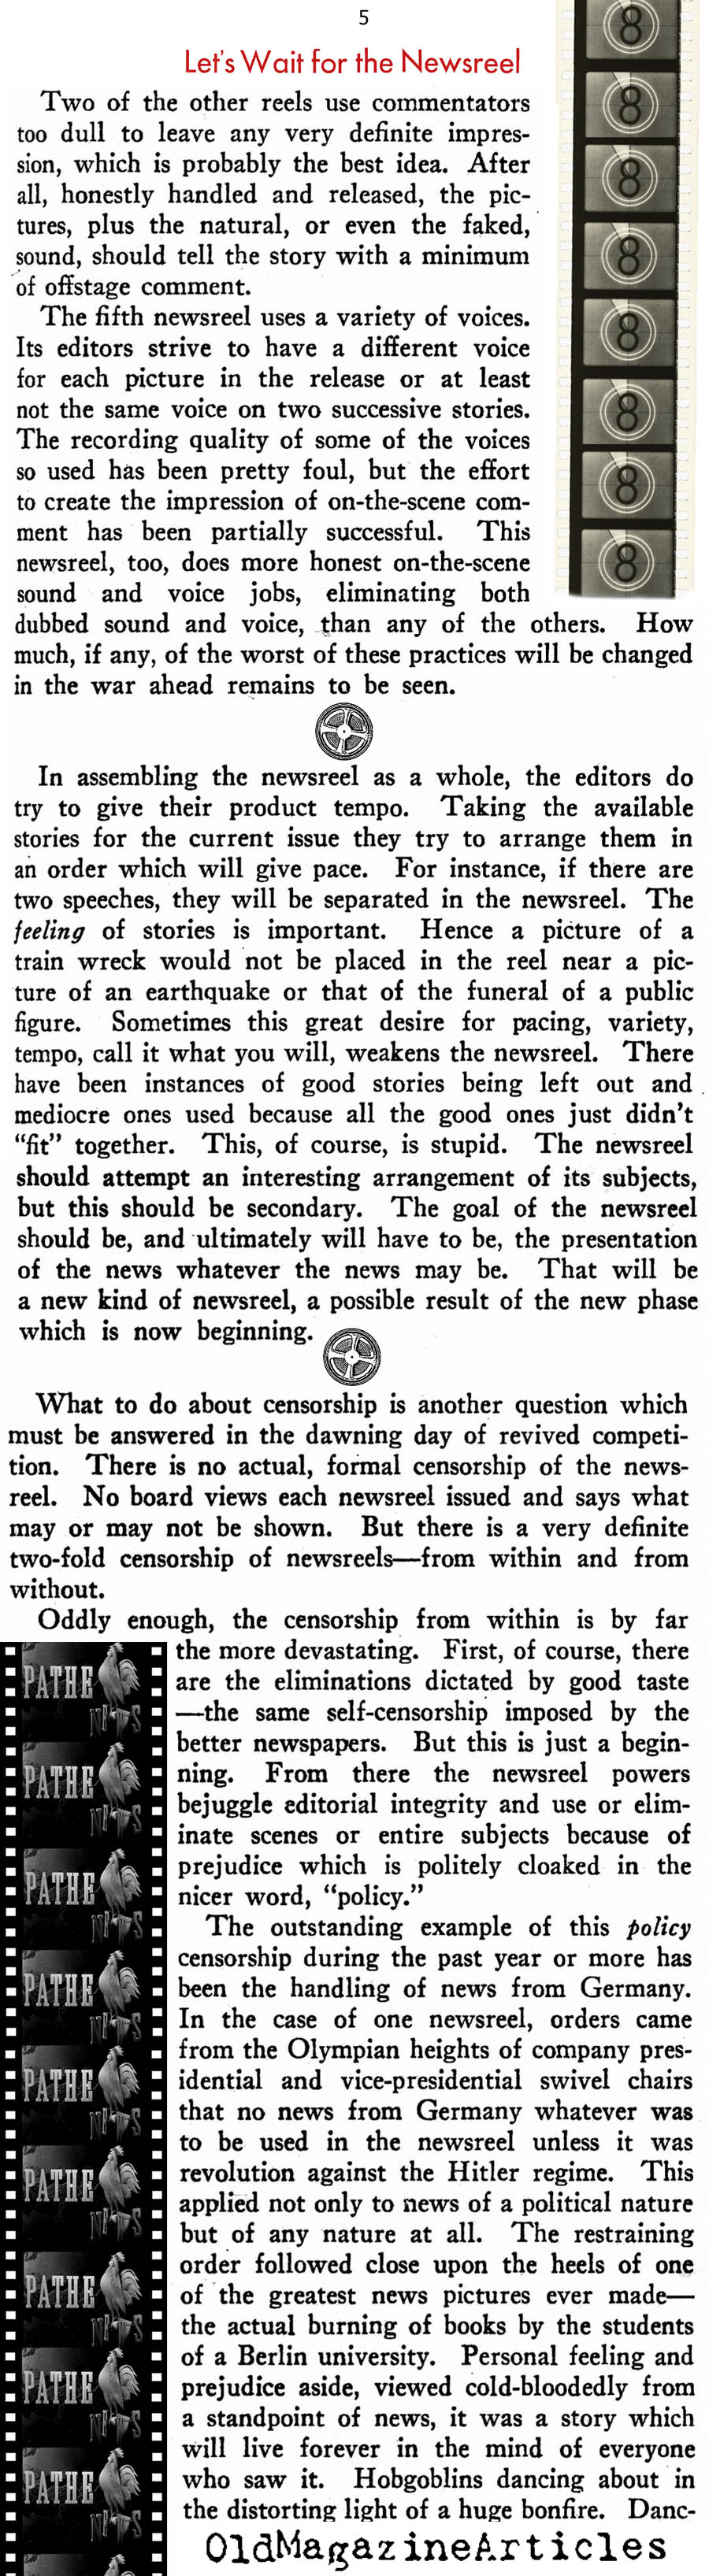 Fake News? (New Outlook Magazine, 1934)